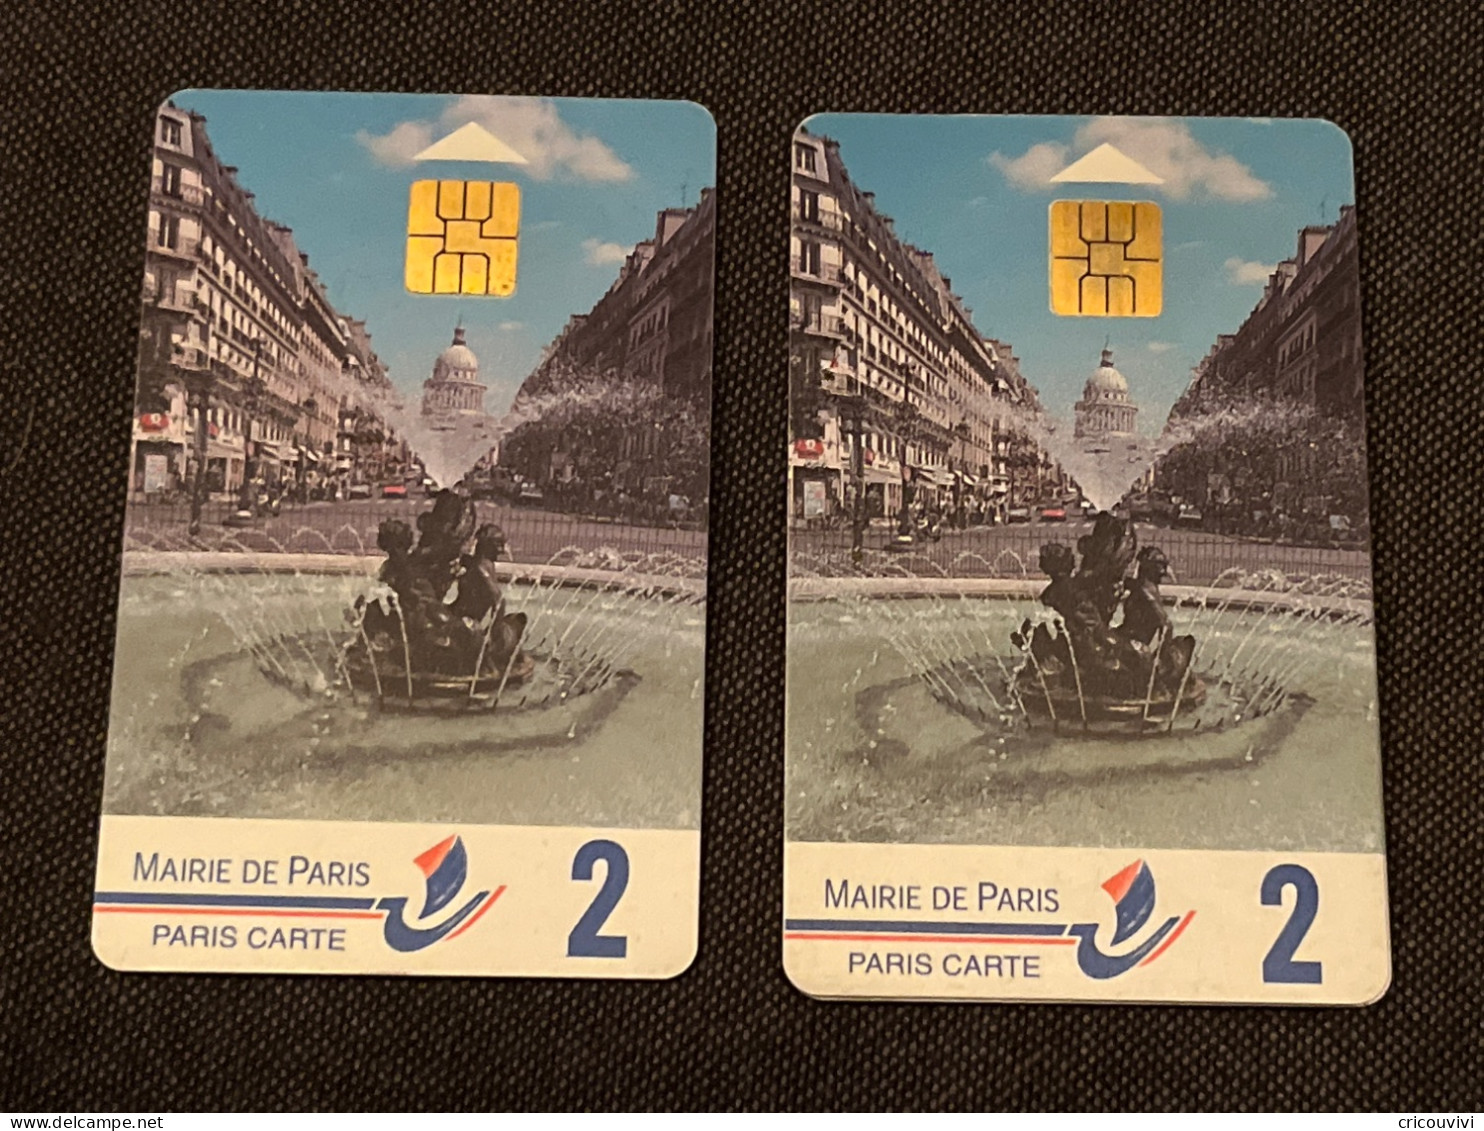 Paris Carte 13 - Parkkarten